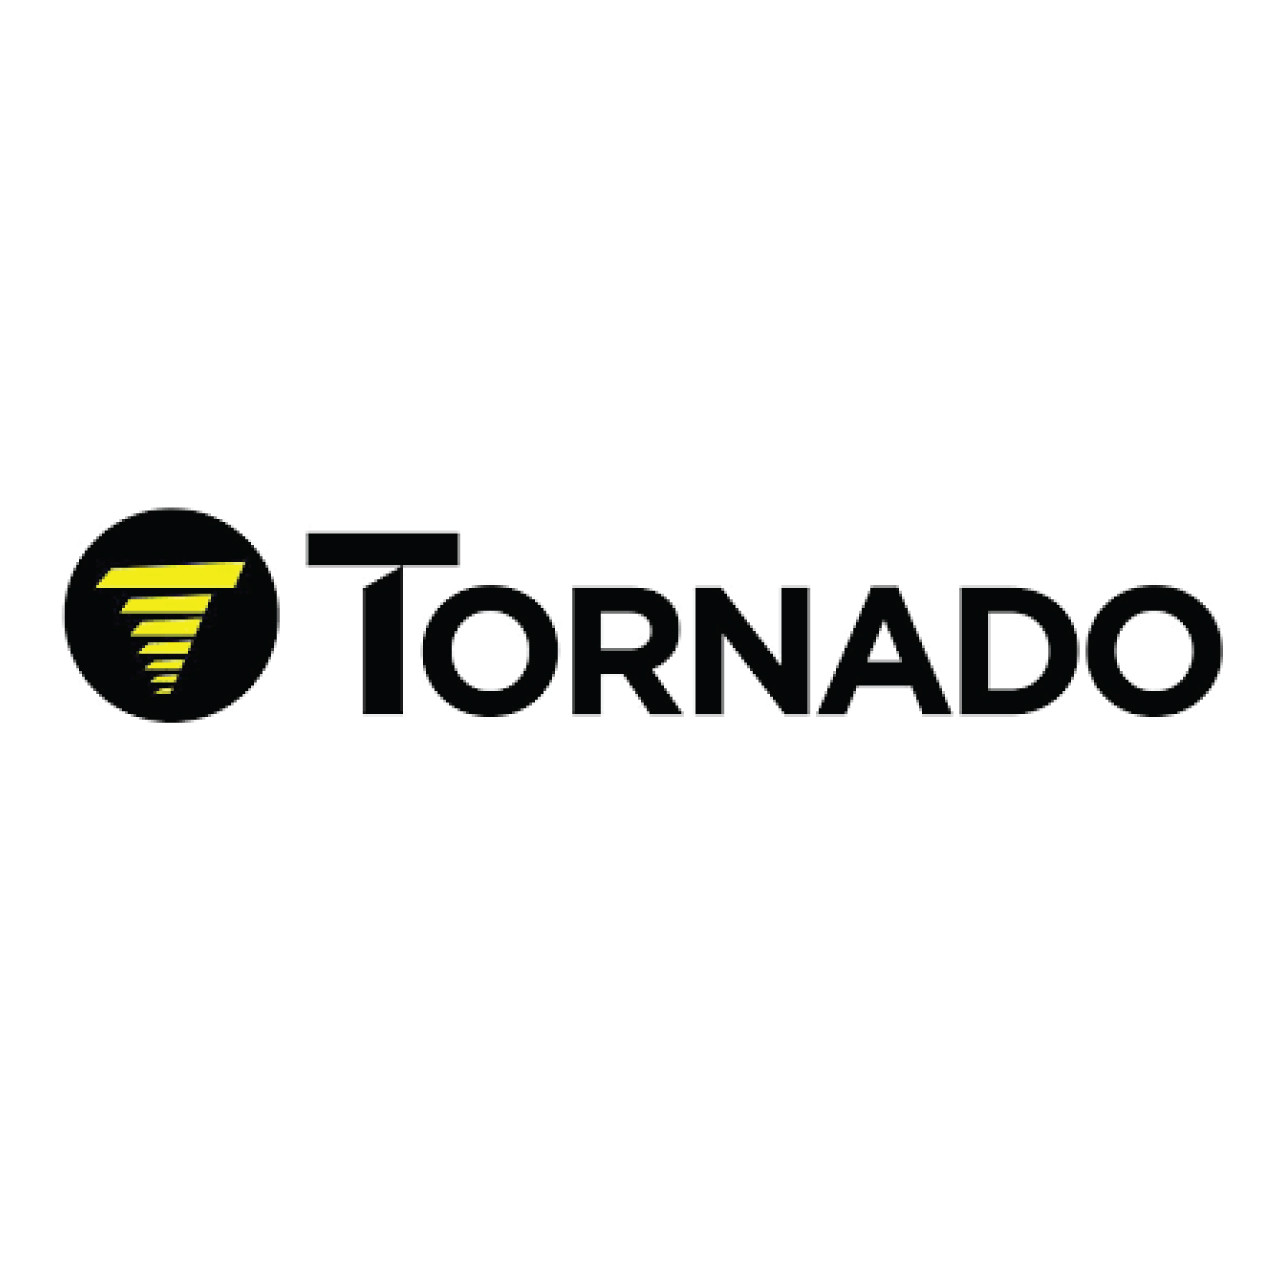 Tornado HFCD-CUBWB - Lighted Display Cube Black pic